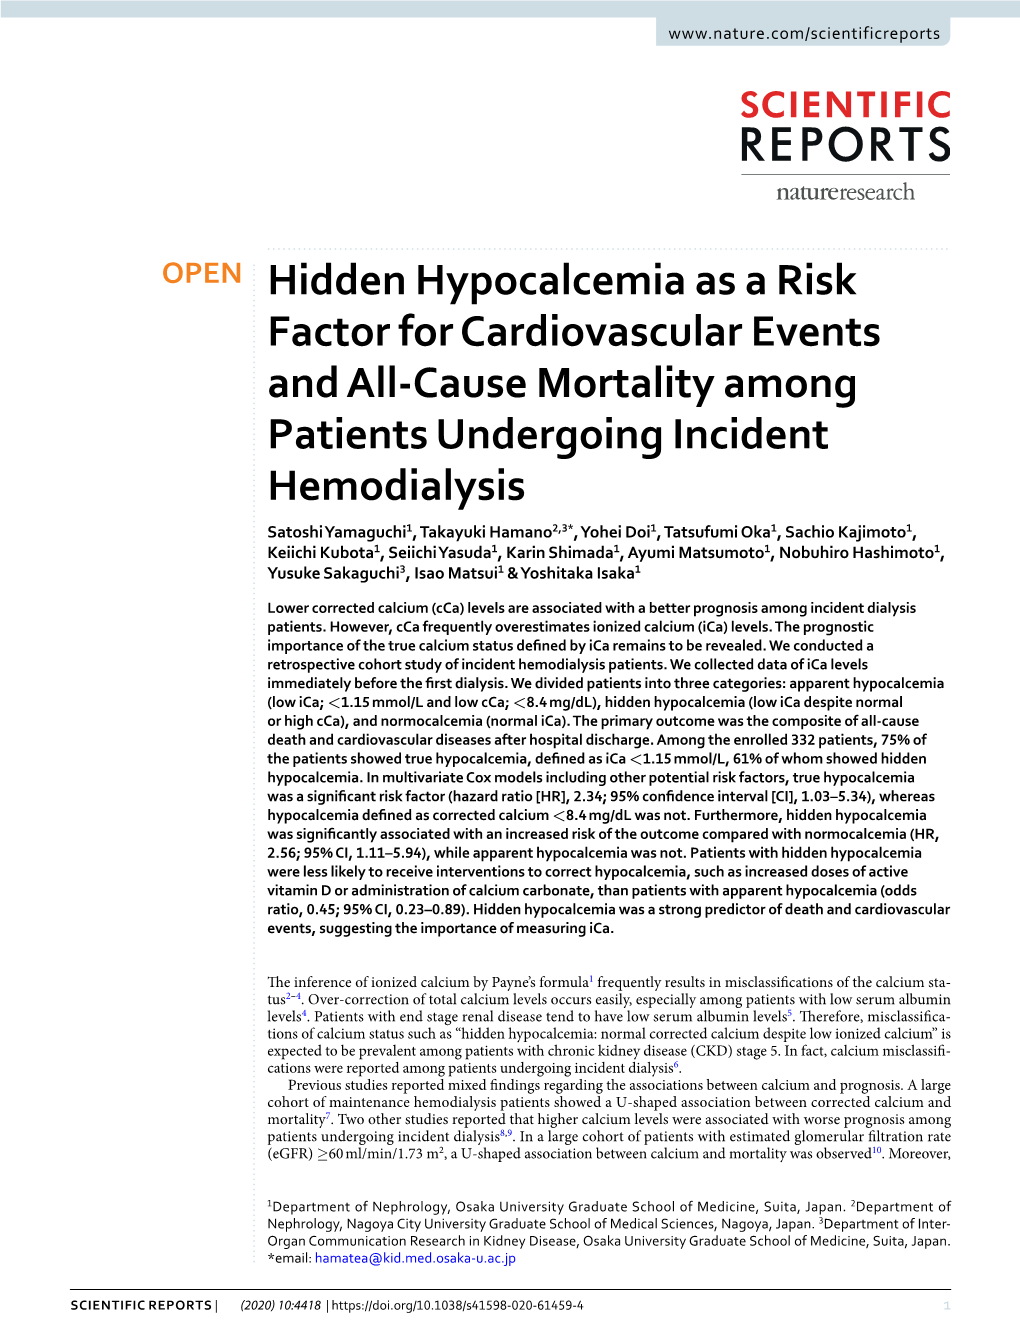 Hidden Hypocalcemia As a Risk Factor for Cardiovascular Events